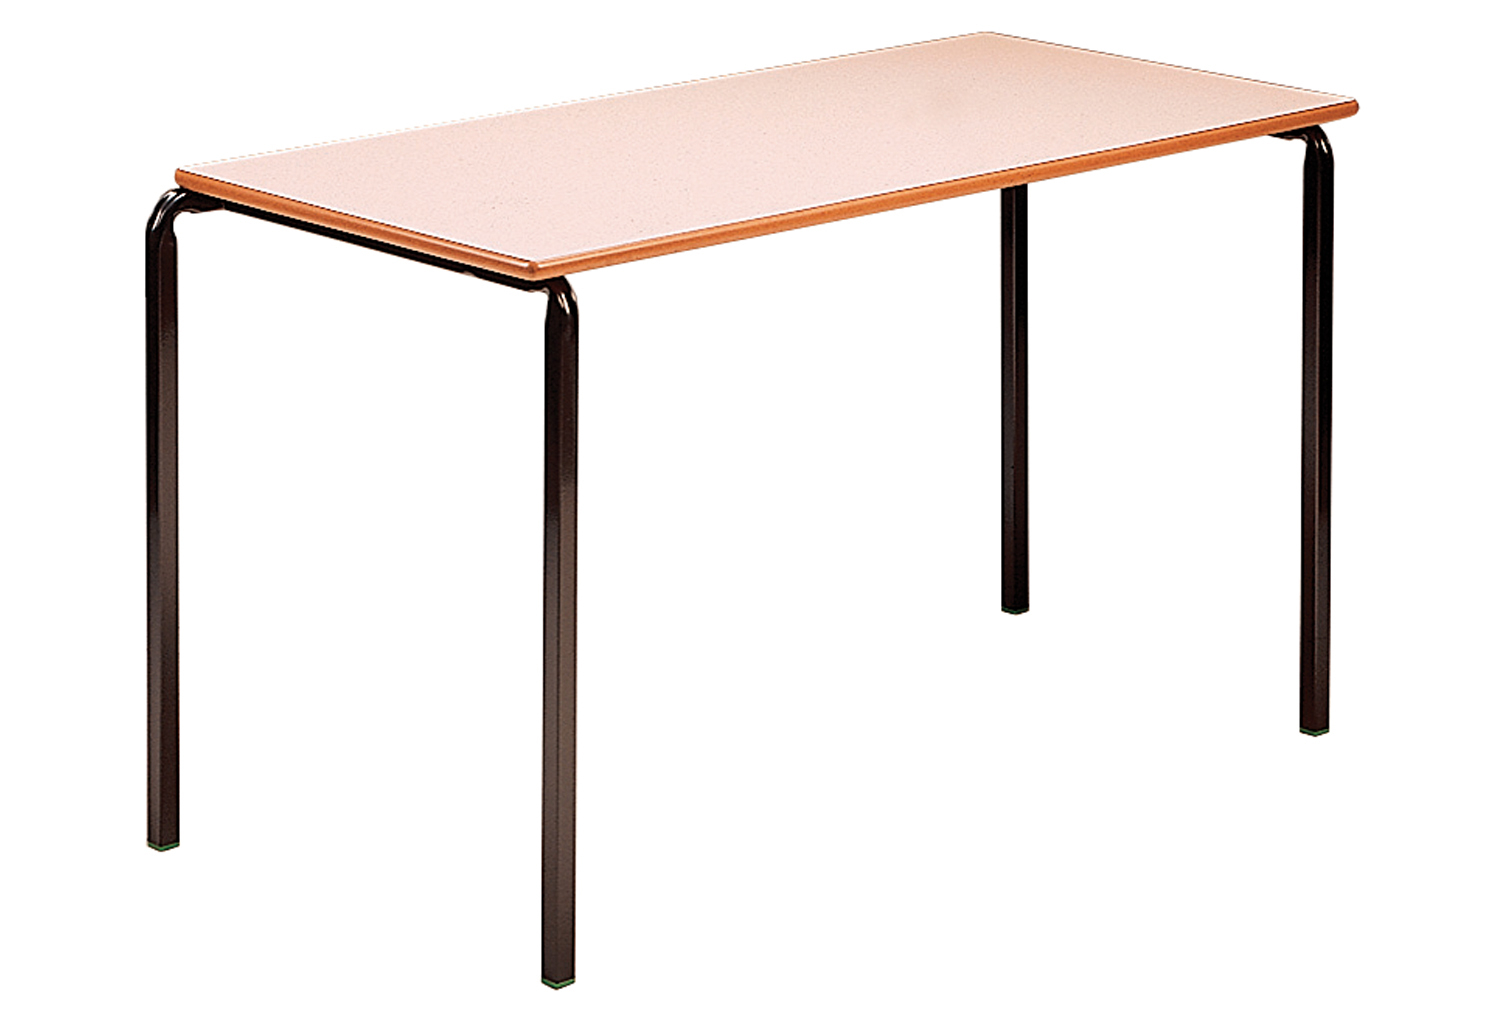 Qty 4 - Rectangular Crush Bent Classroom Tables 6-8 Years, 110wx55dx59h (cm), Black Frame, Beech Top, MDF Beech Edge